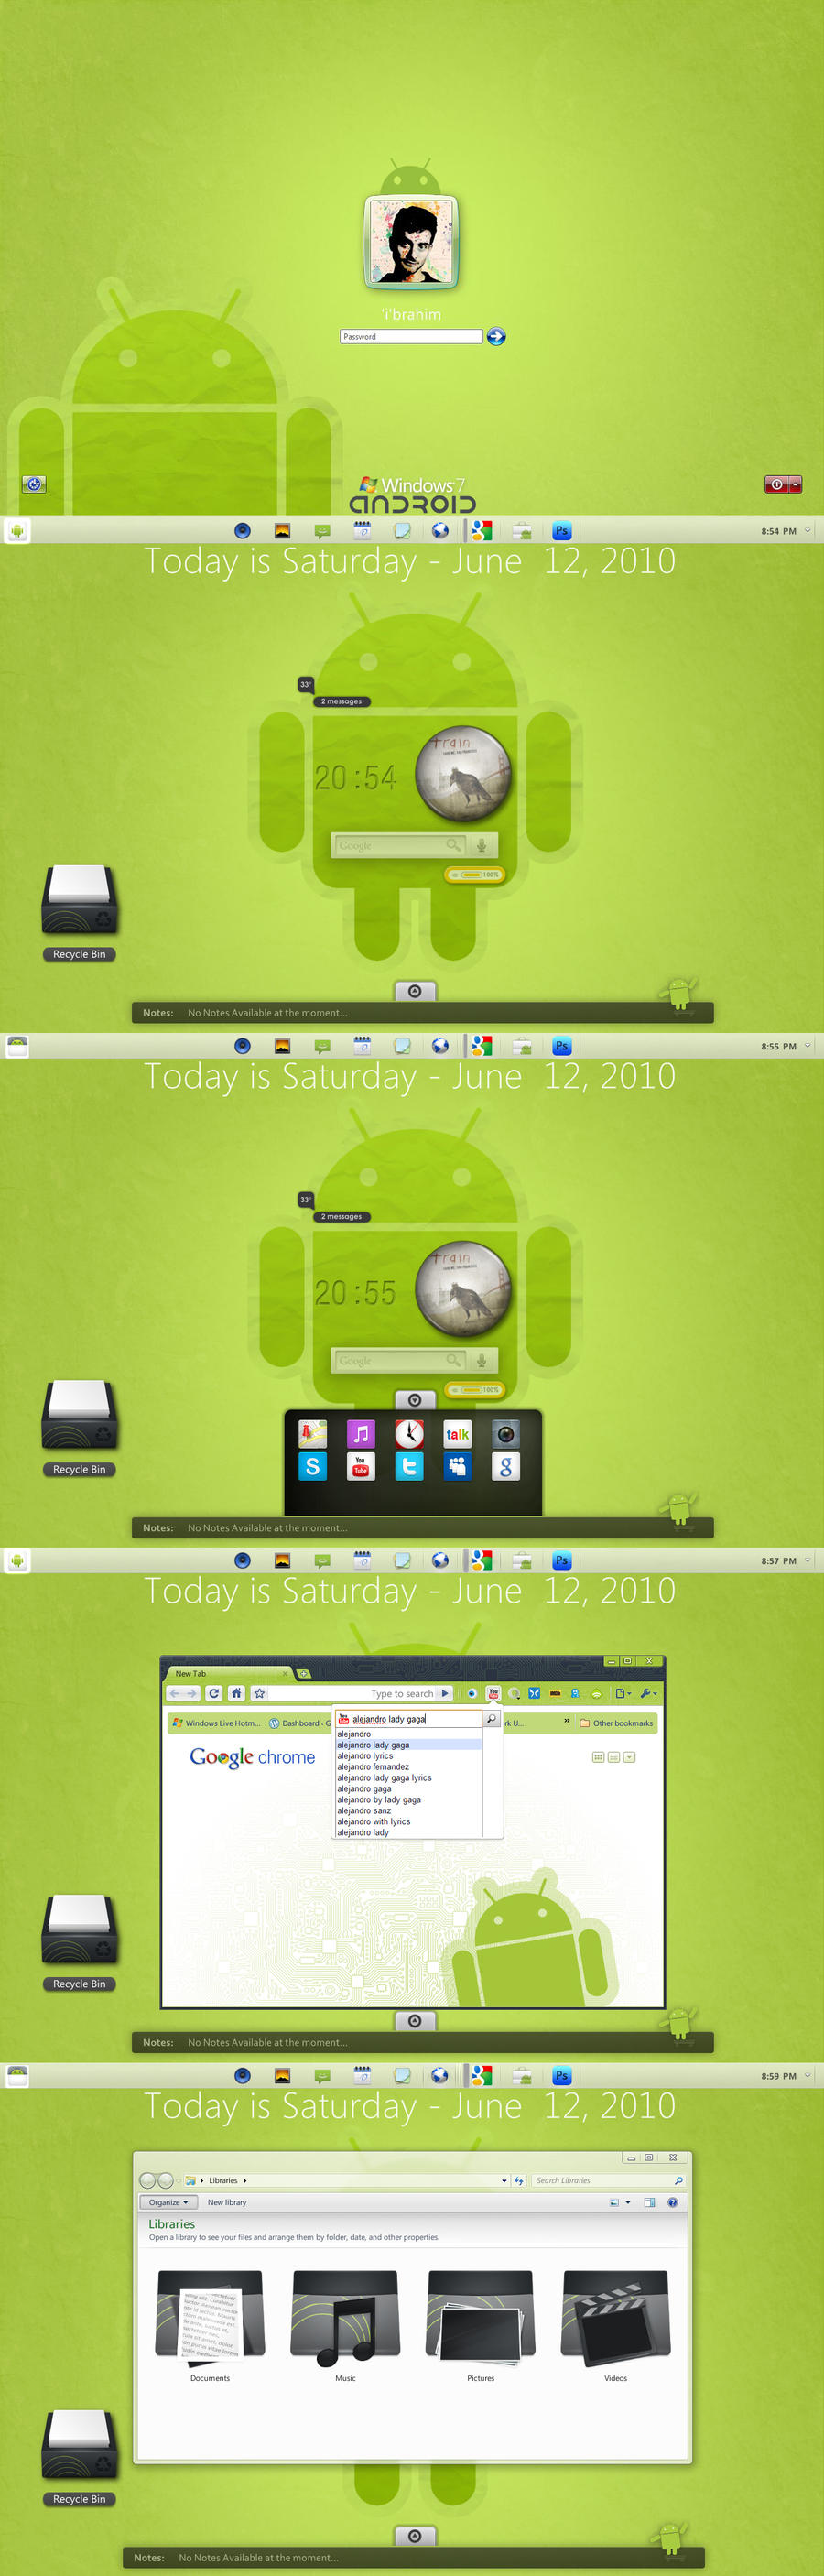 'i'Android Desk - June 2010